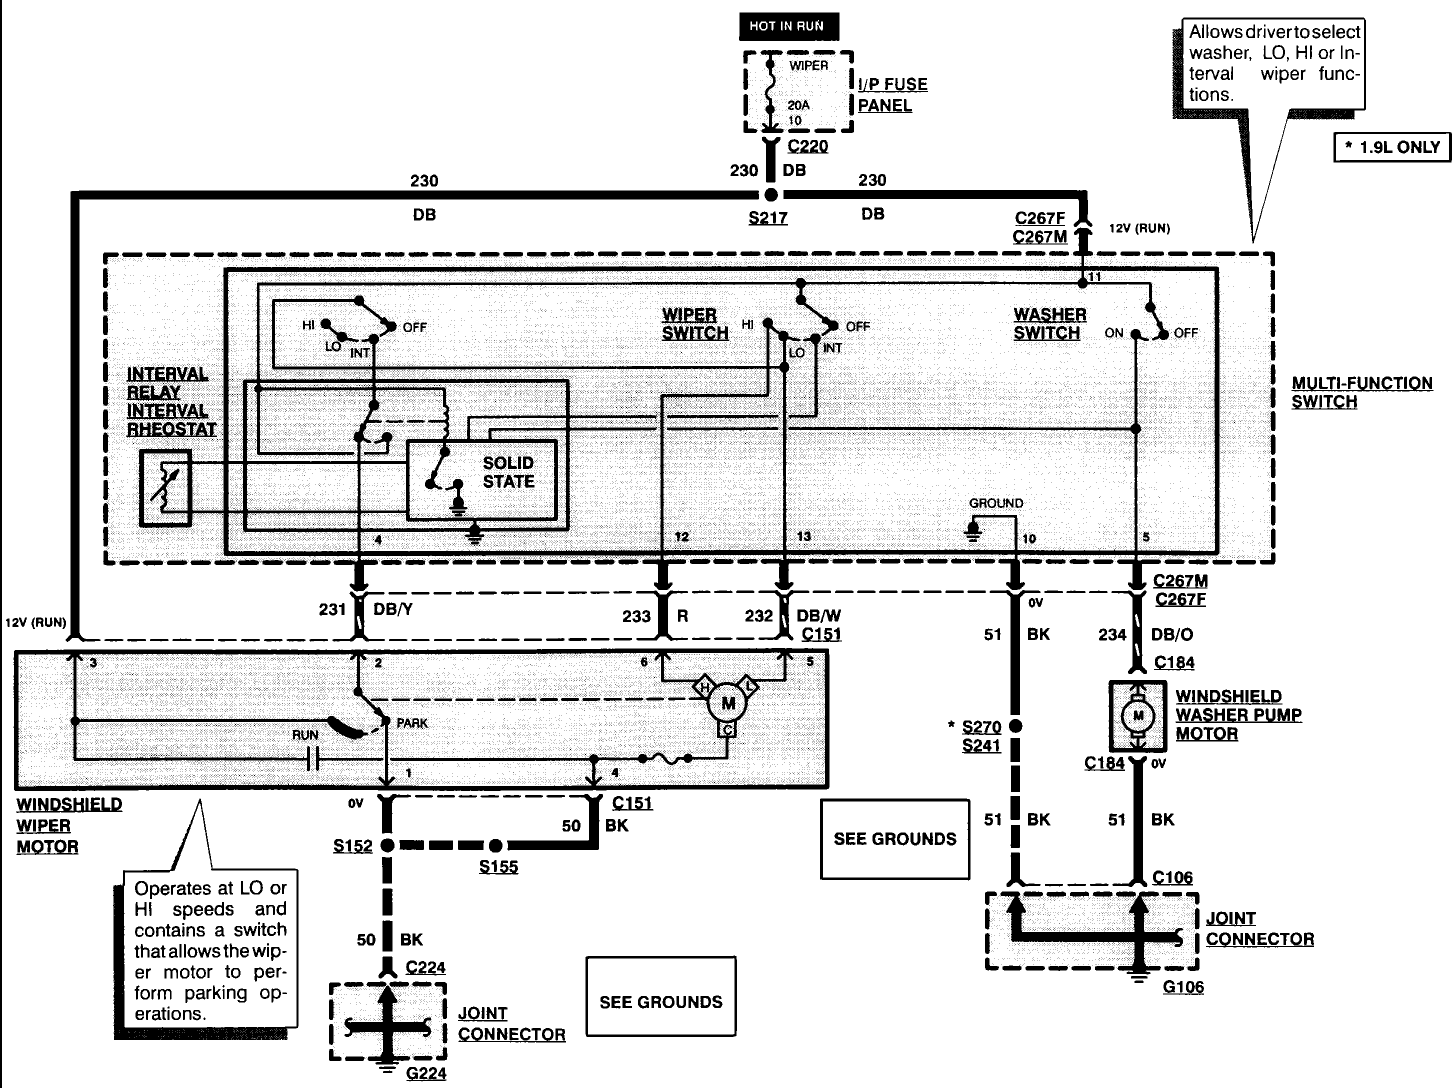 Ford Windstar Wiper Motor Wiring Diagram - Wiring Diagram